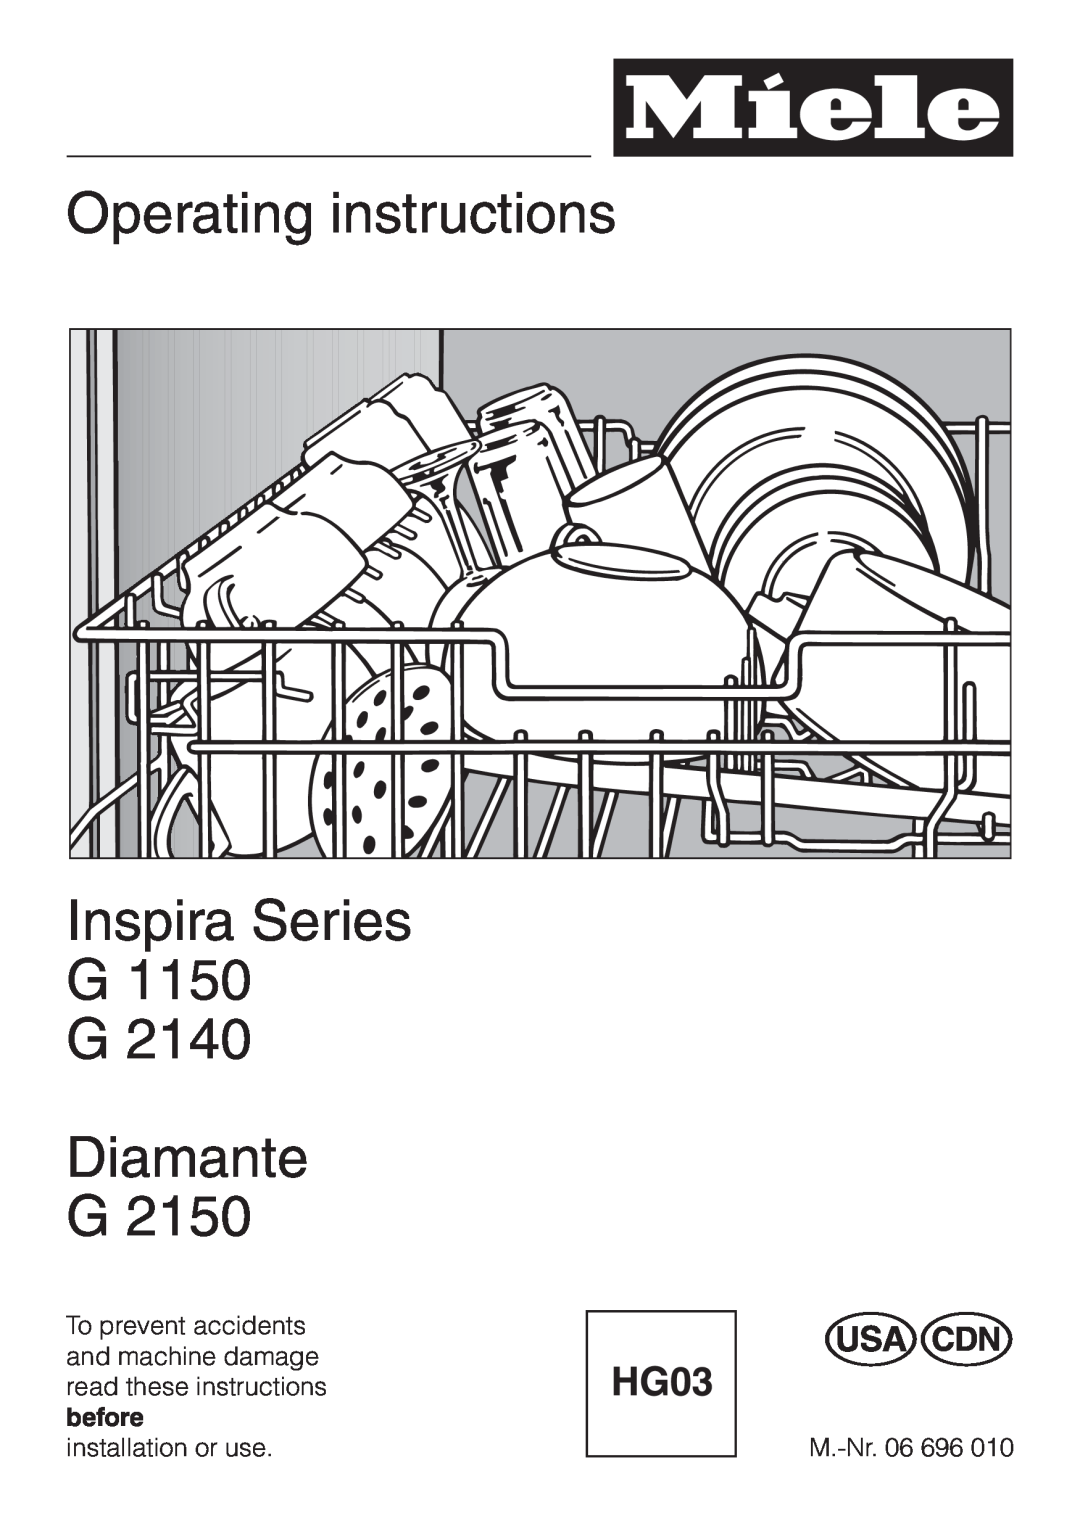 Miele G 2150, G 1150 operating instructions Operating instructions Inspira Series G1150 G2140, Diamante G 